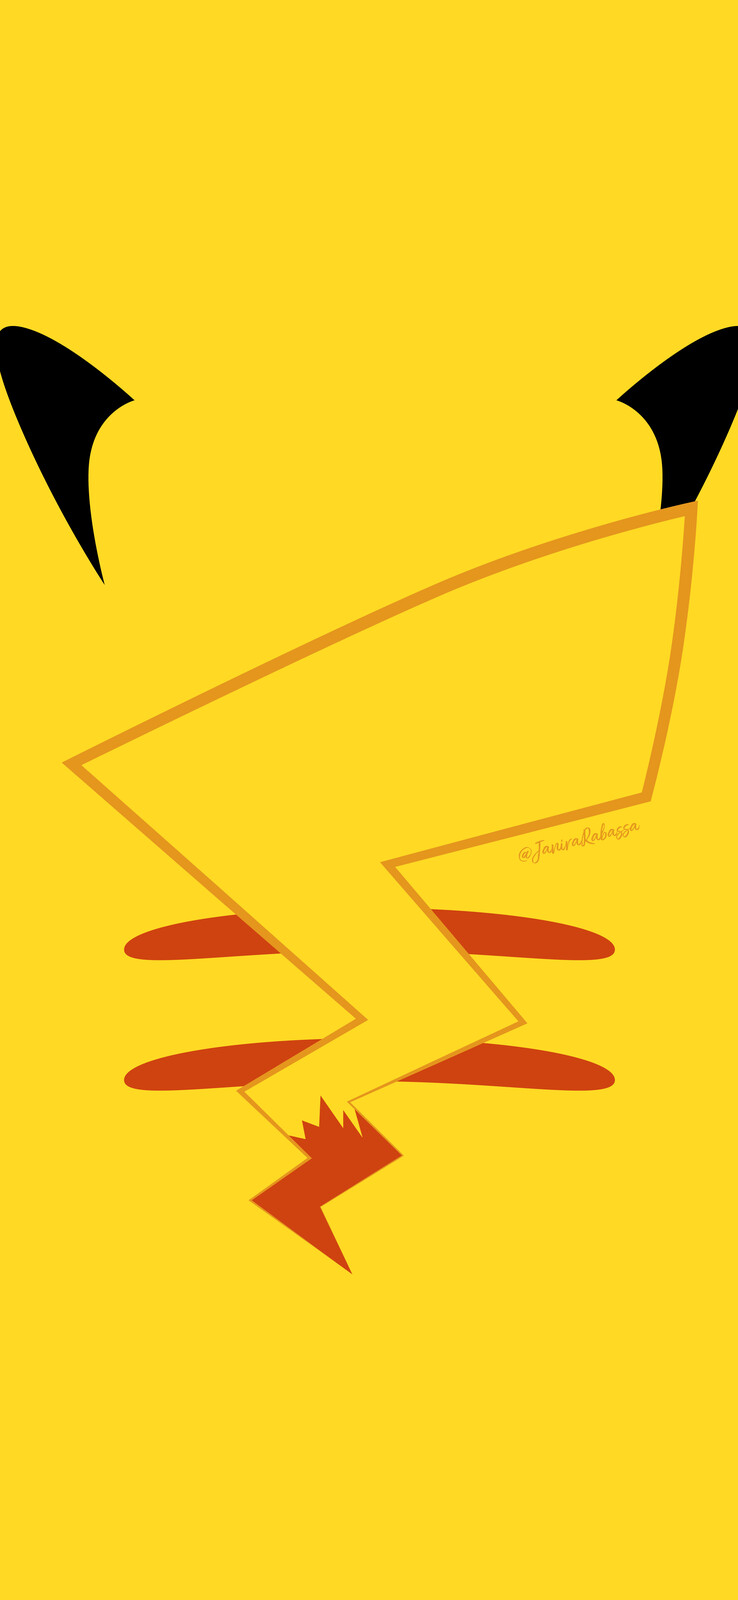 025 Pikachu Minimal Wallpaper Janira Rabassa Artstation